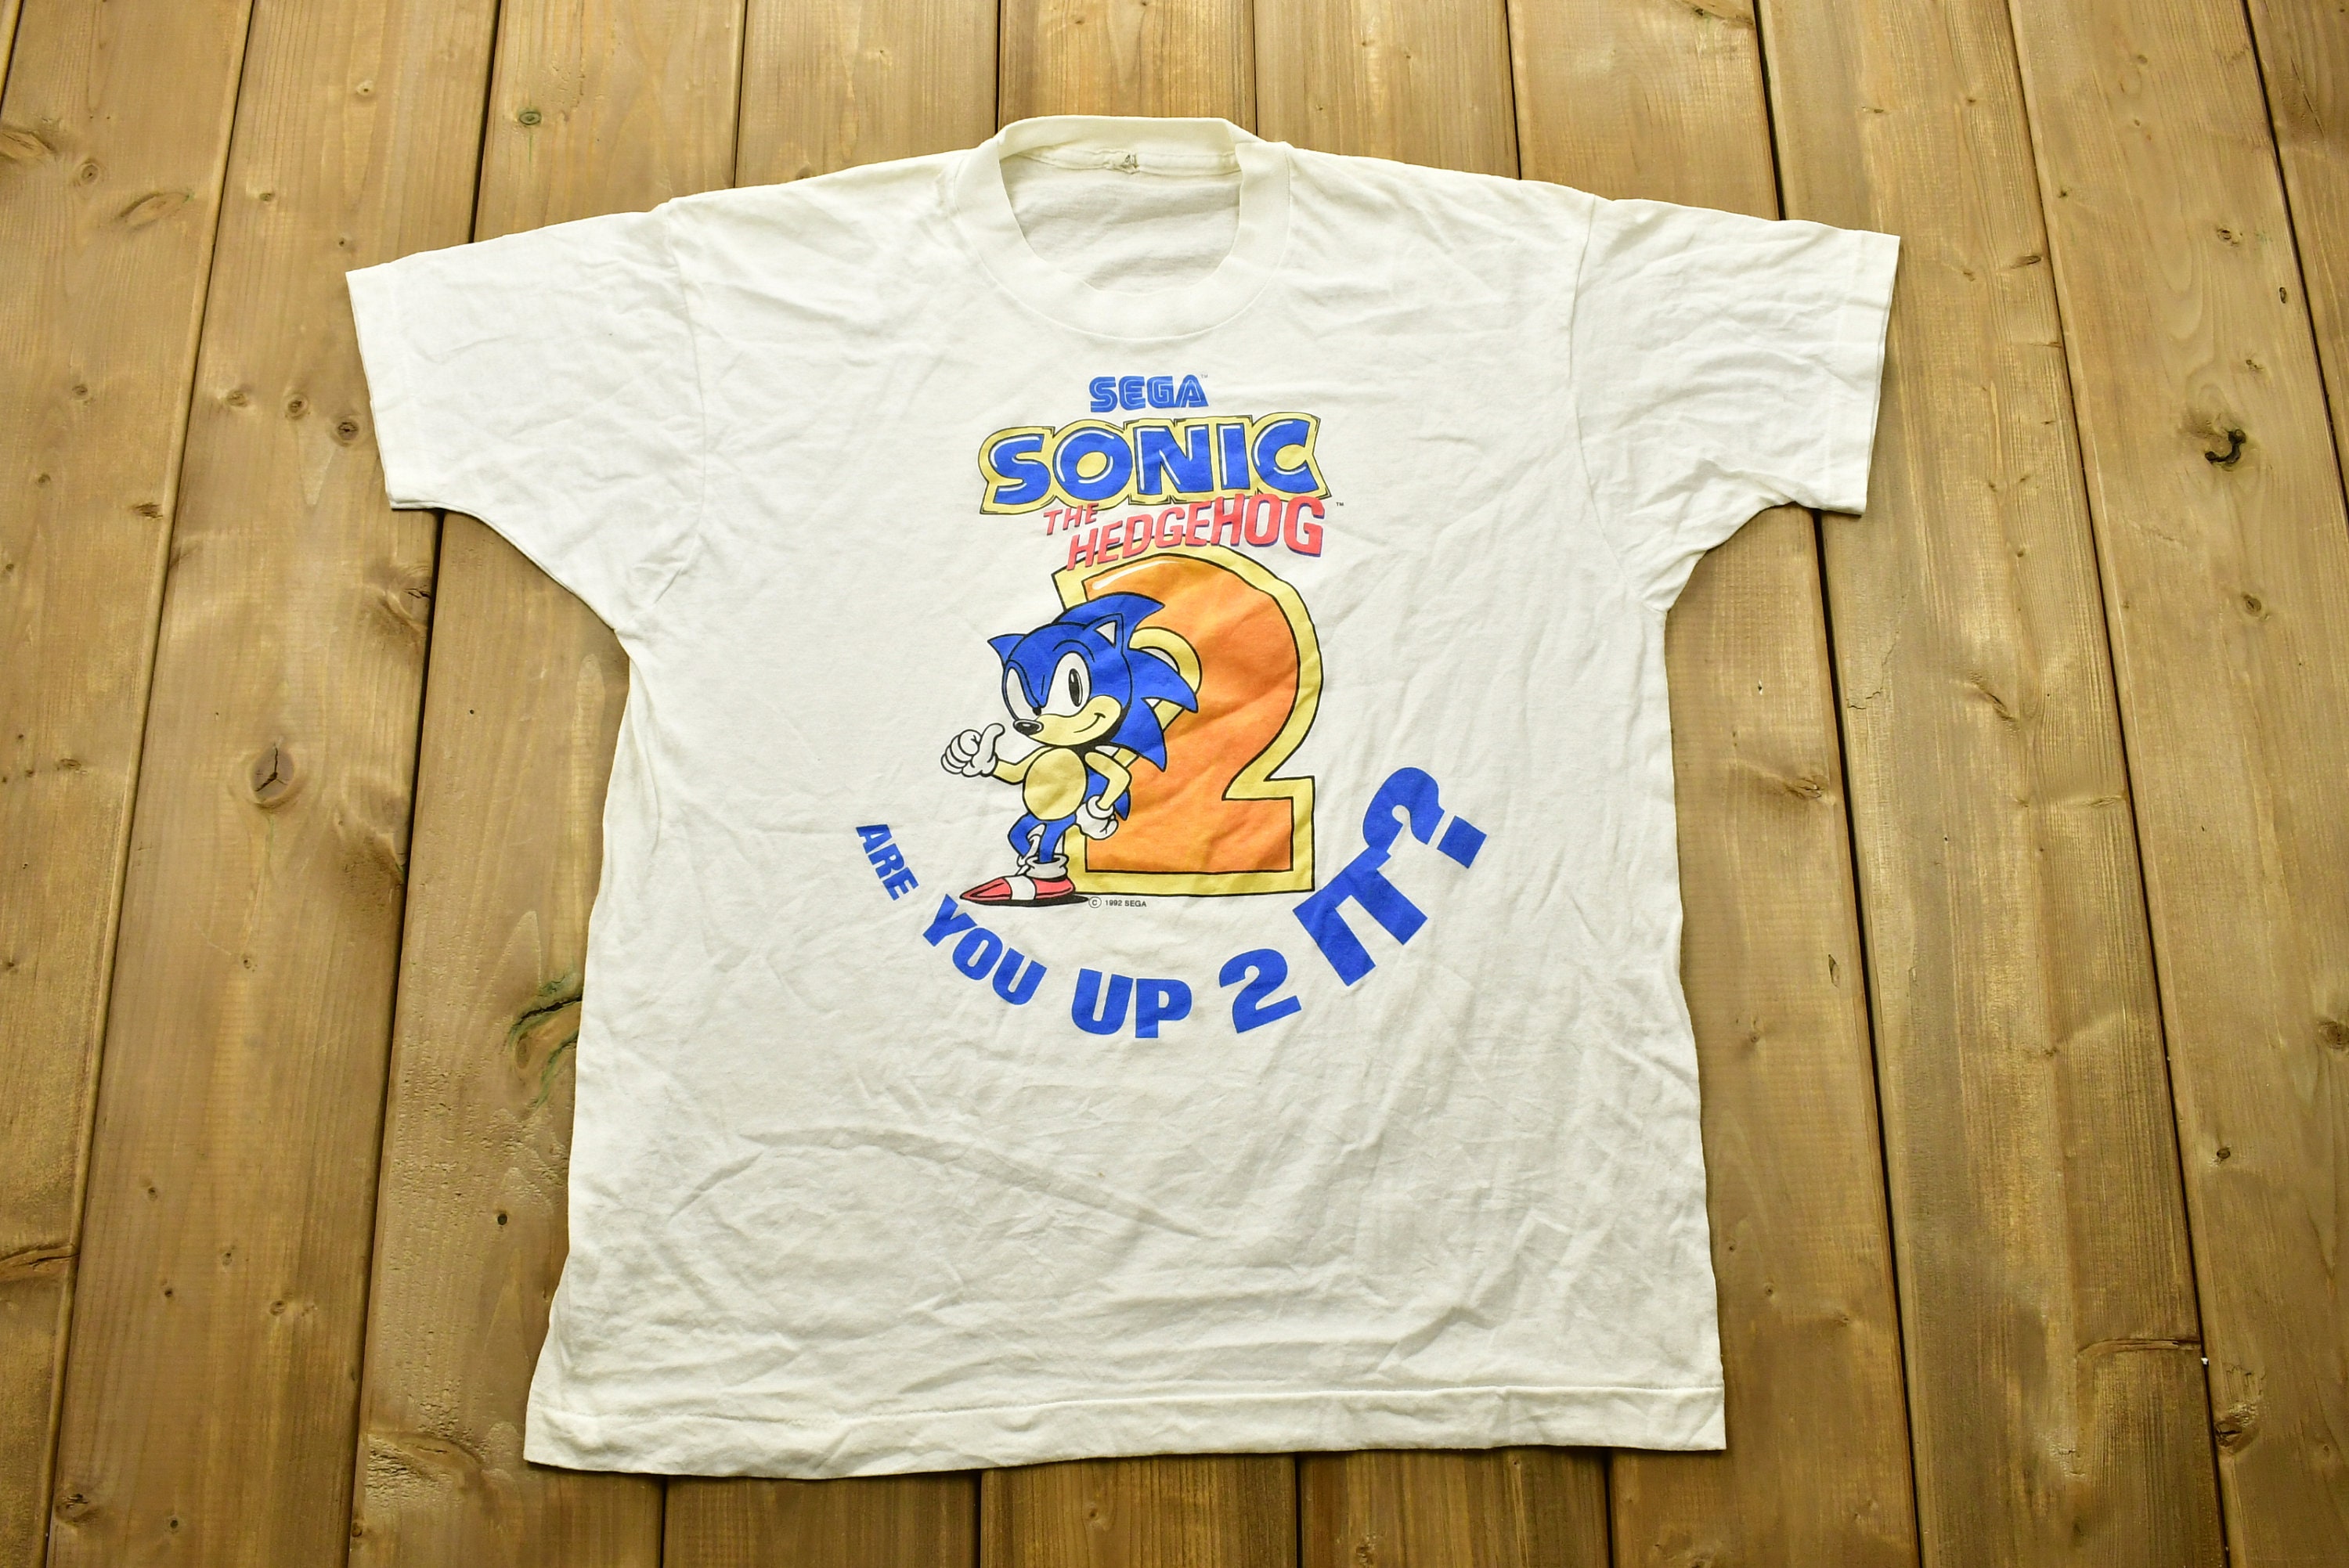  SEGA Sonic The Hedgehog Men's Shirt - The Fastest